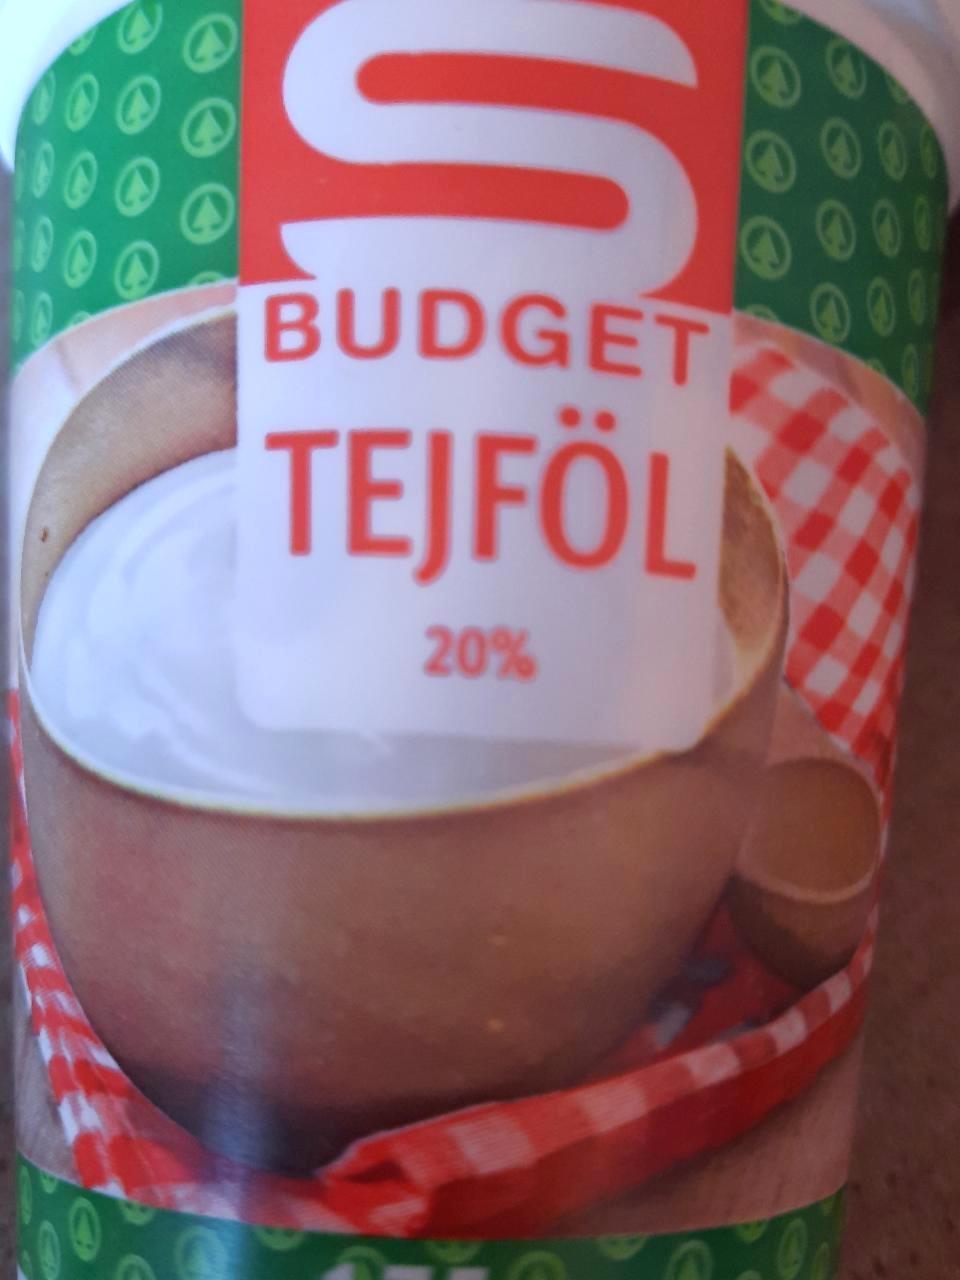 Képek - Tejföl 20% S Budget